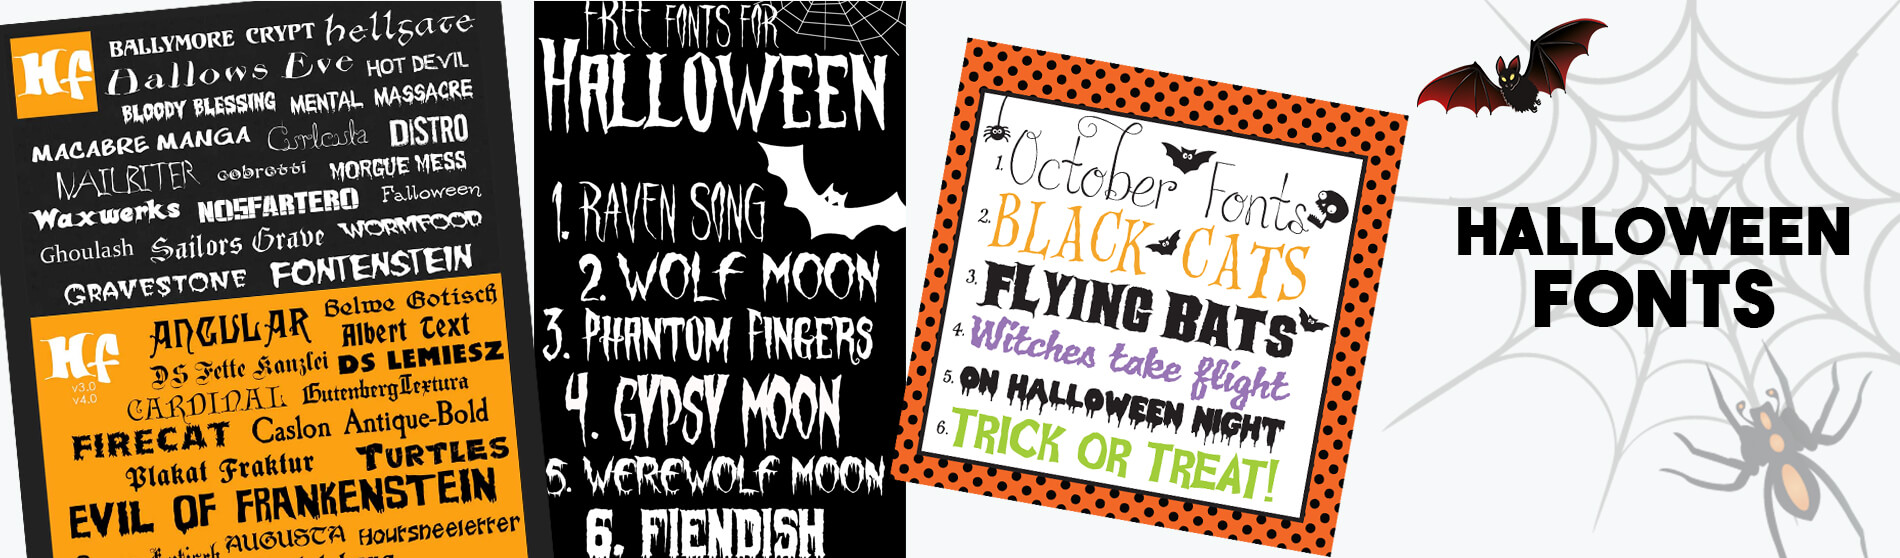 Glendale Halloween : Halloween-Fonts